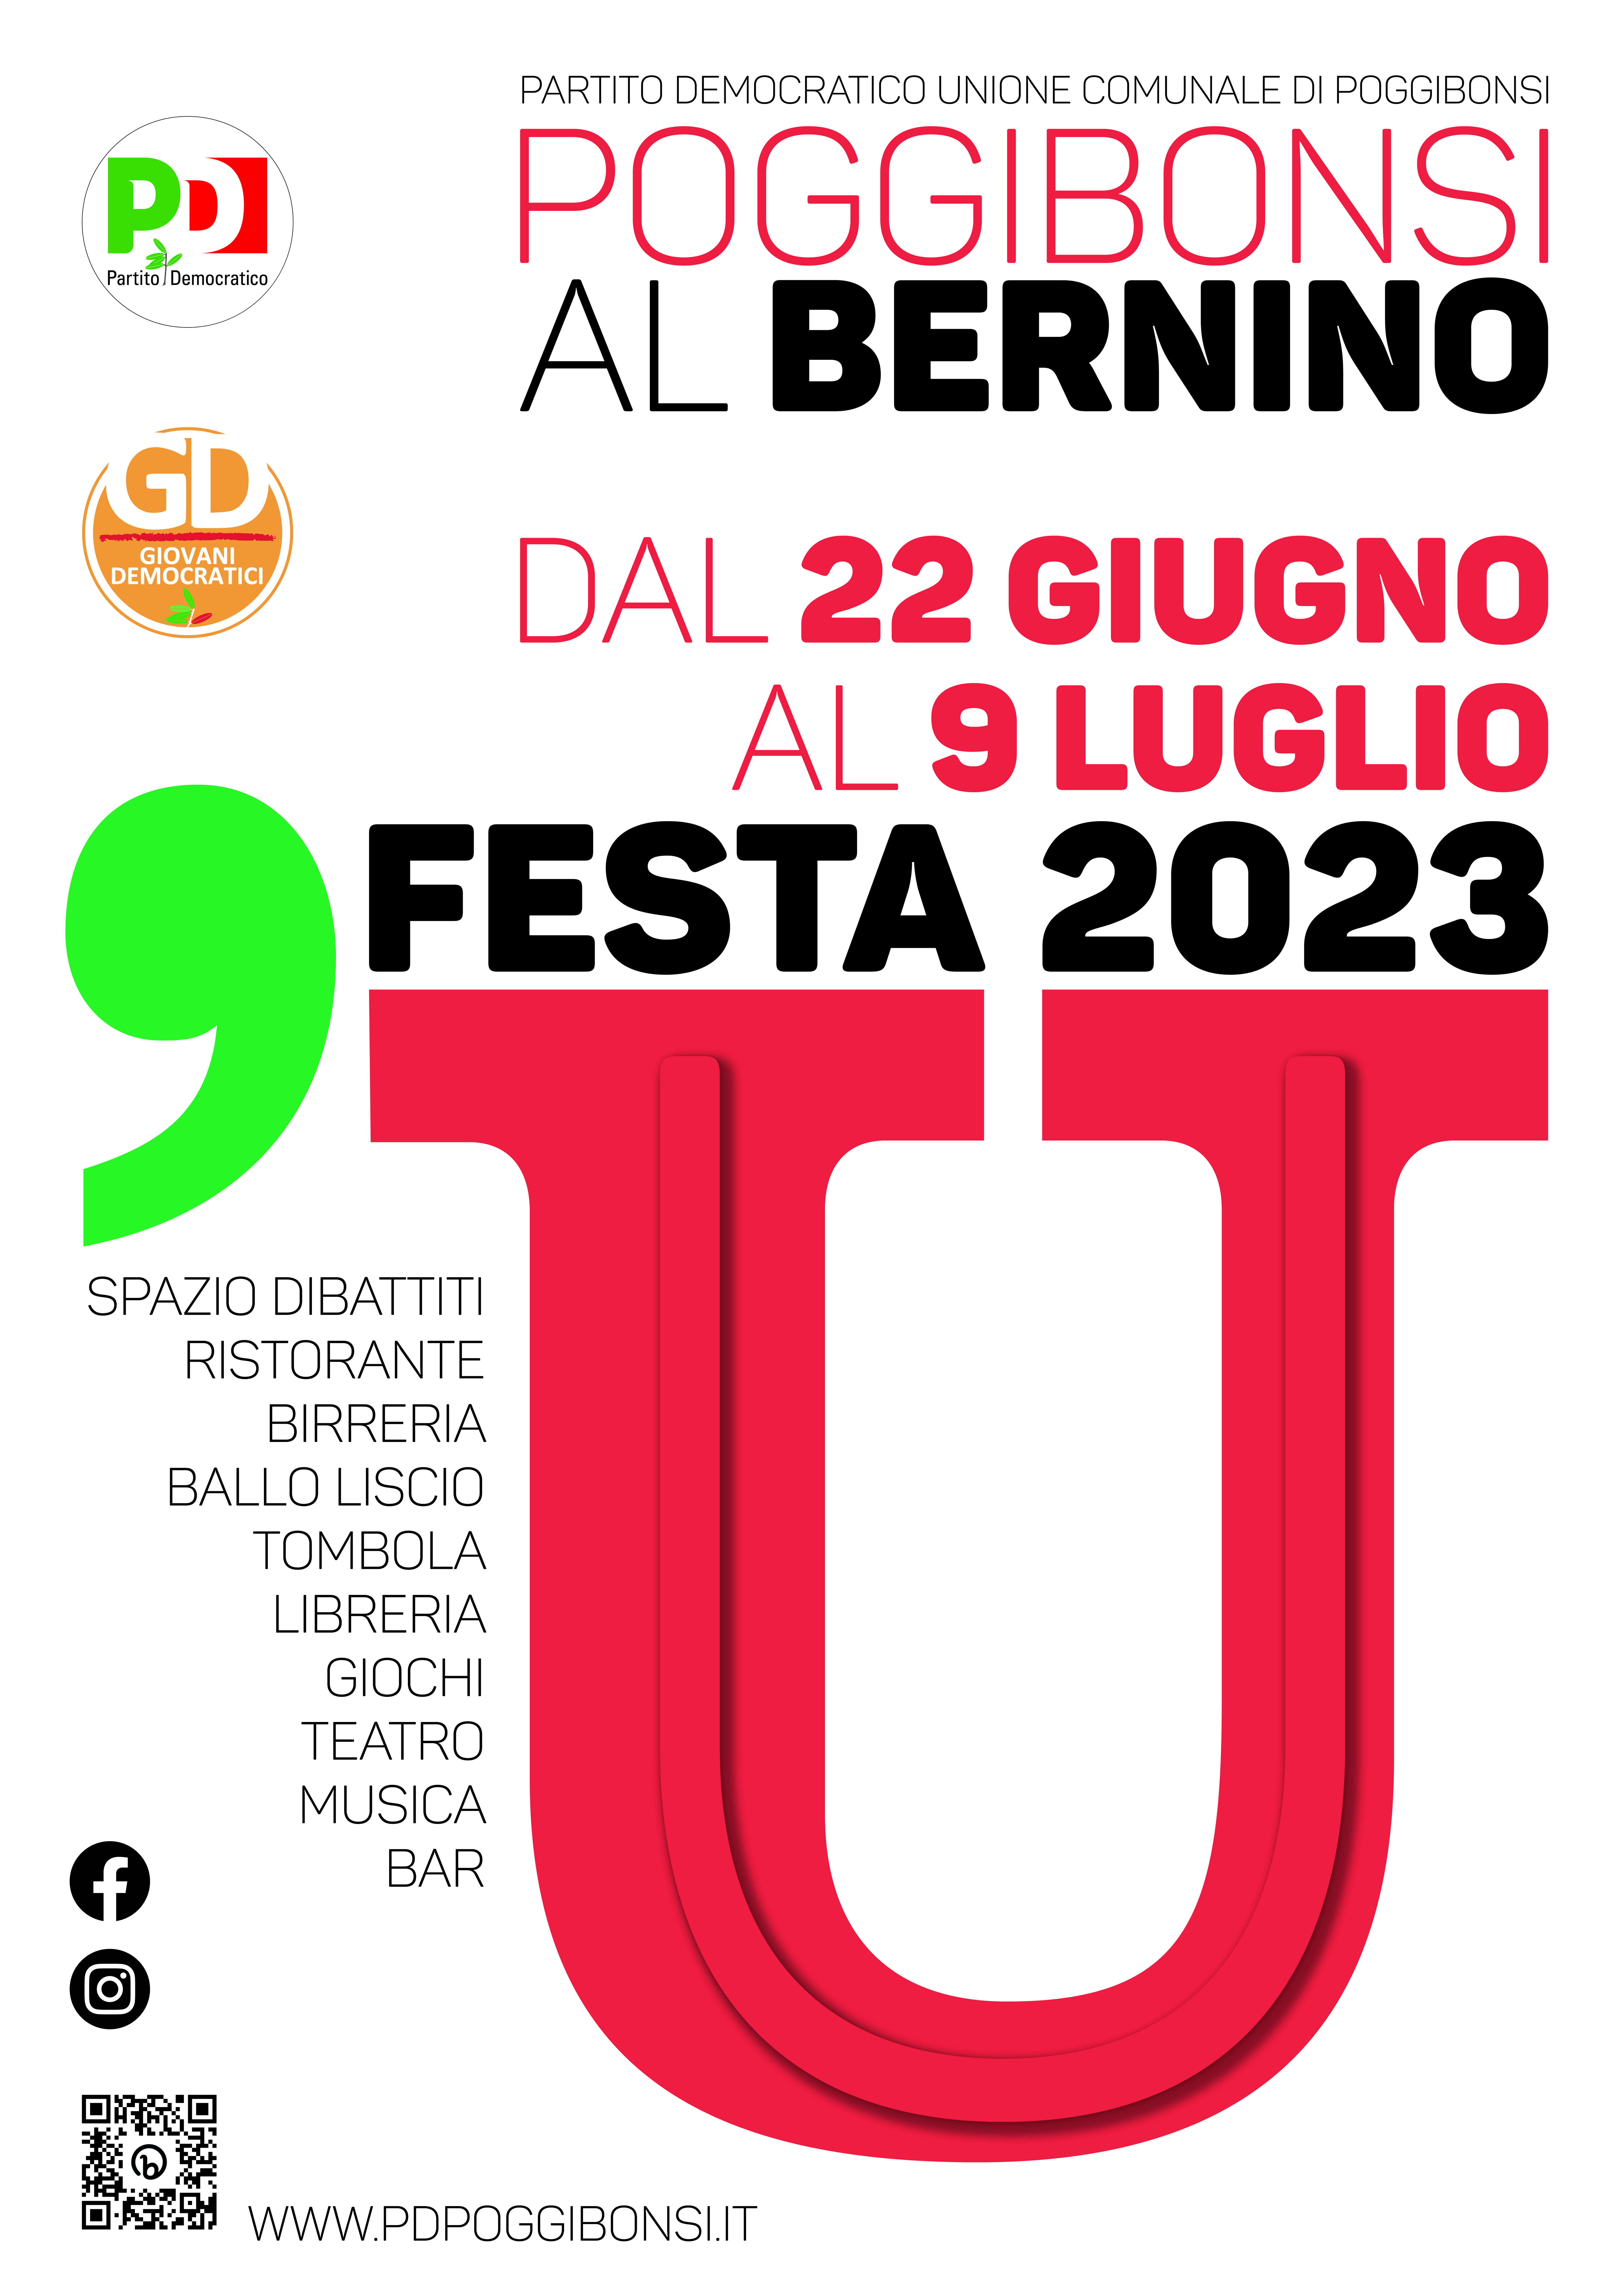 FESTA U 23 manifesto def-01